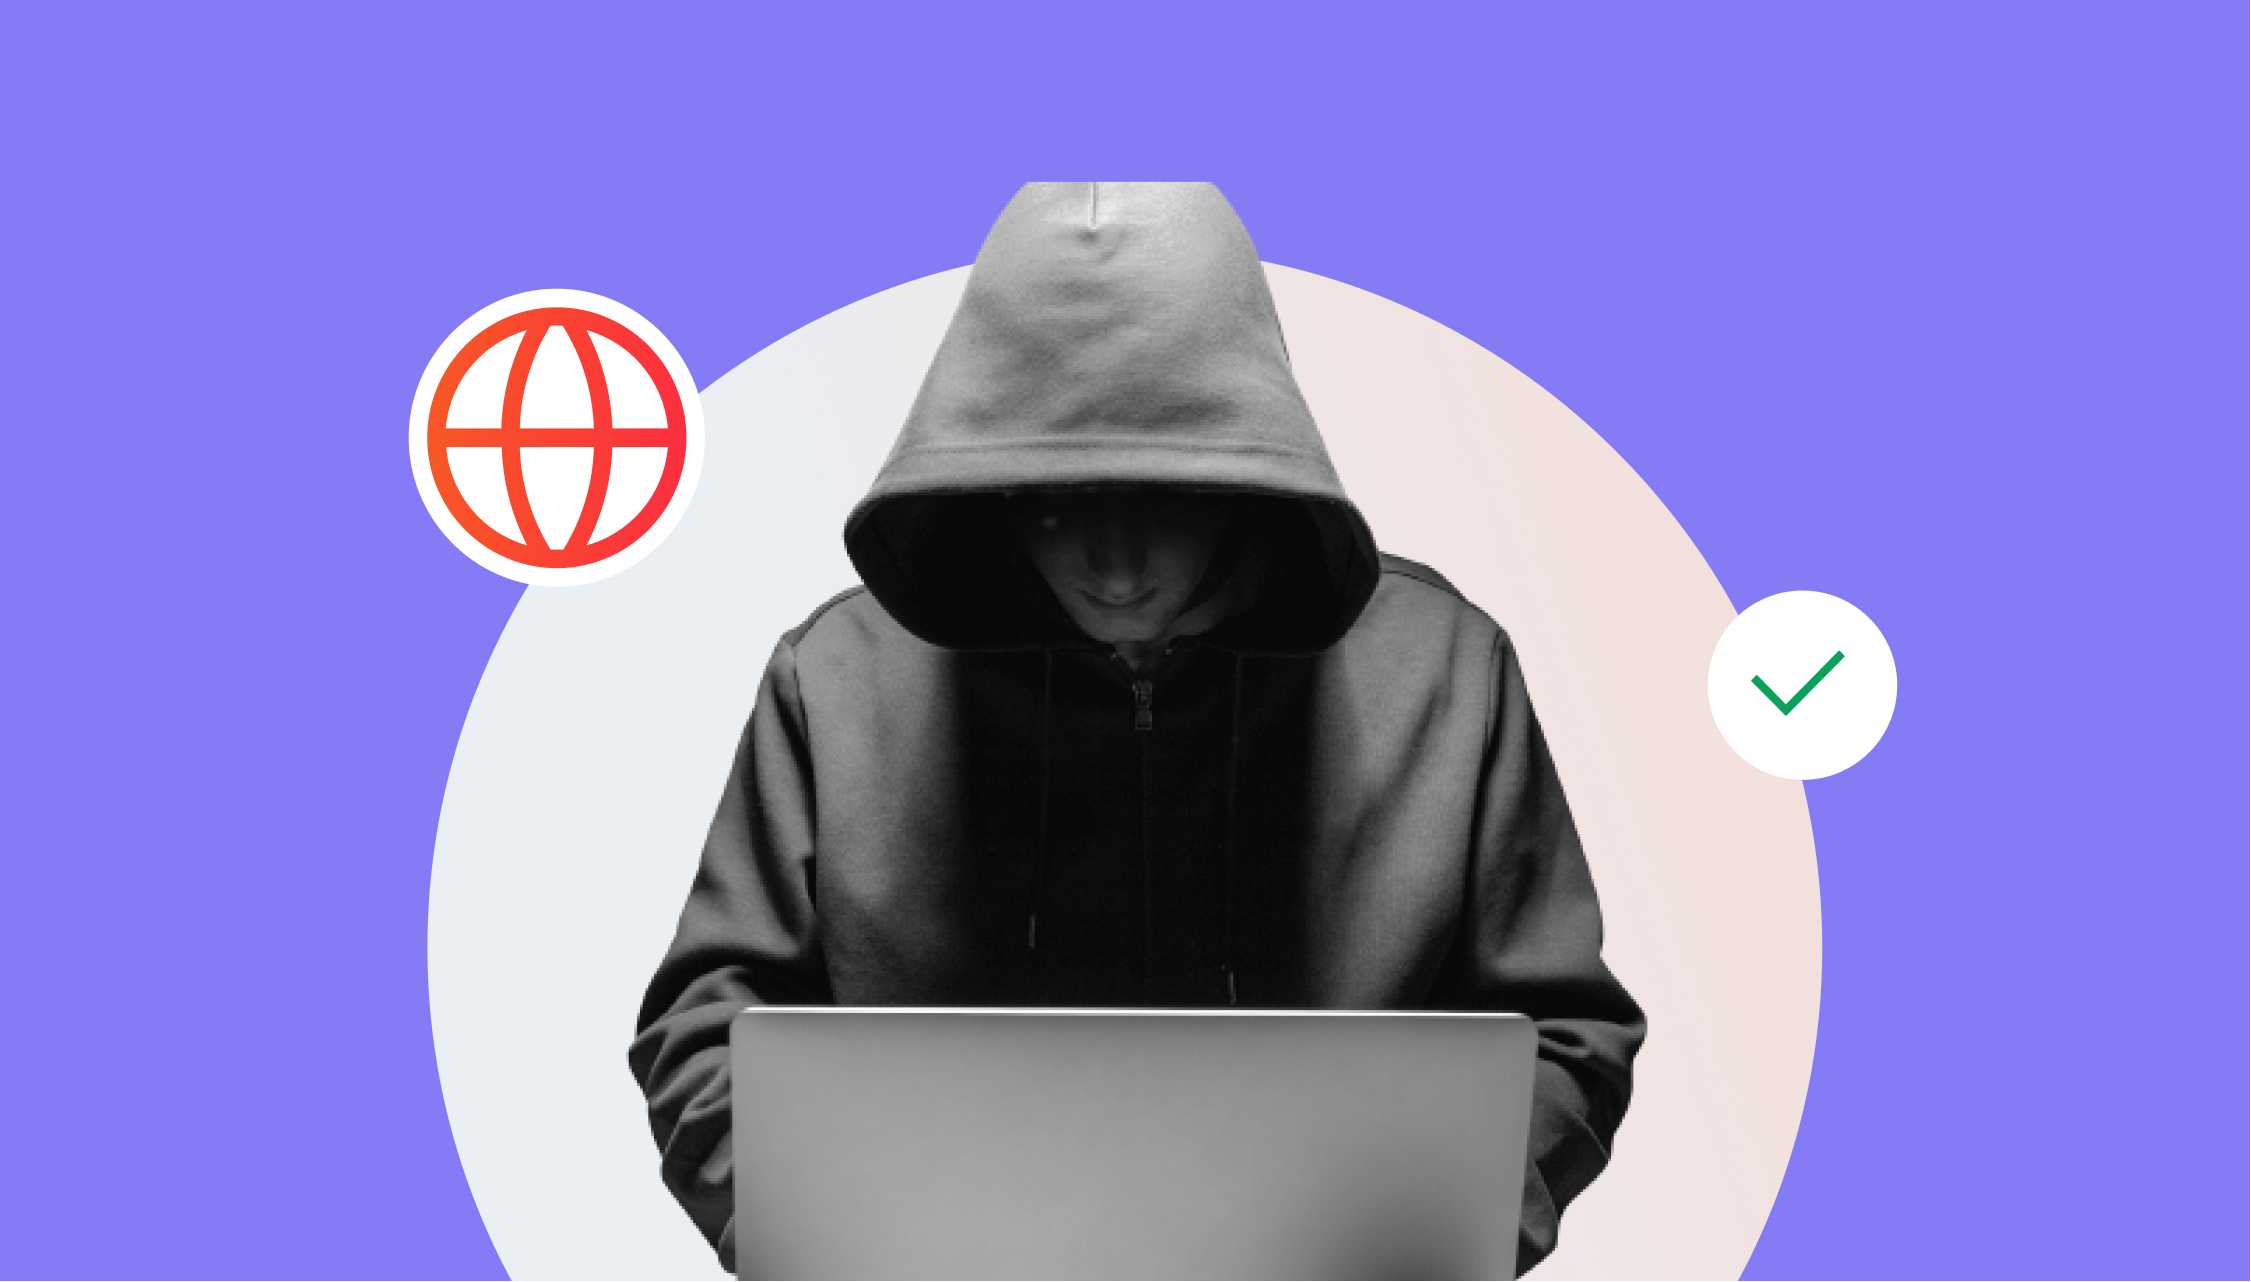 Cybercriminal Domain Hijacking on White Circle and a World Globelicon